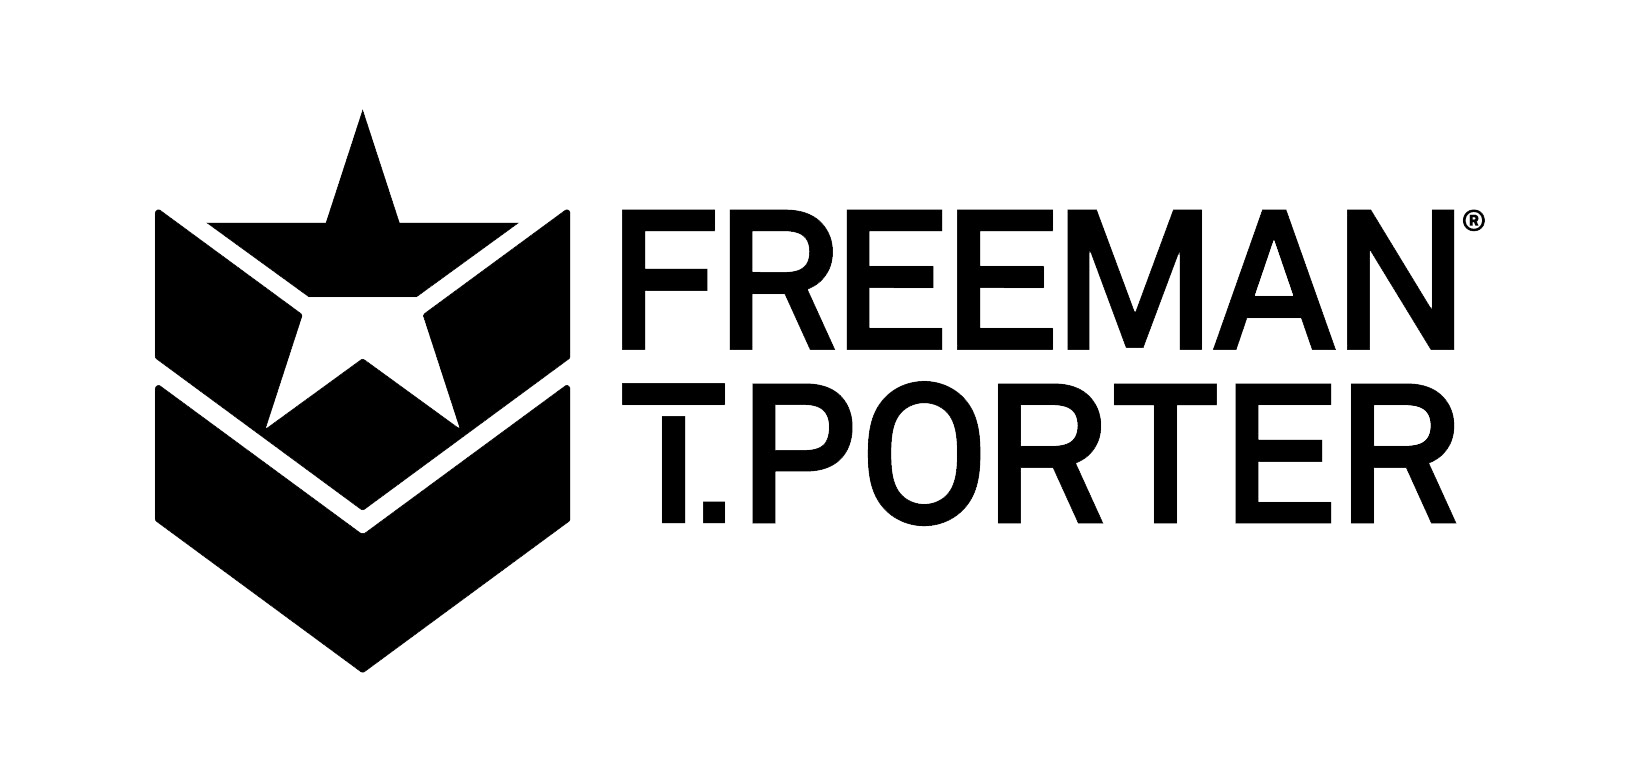 freeman-t-porter-logo